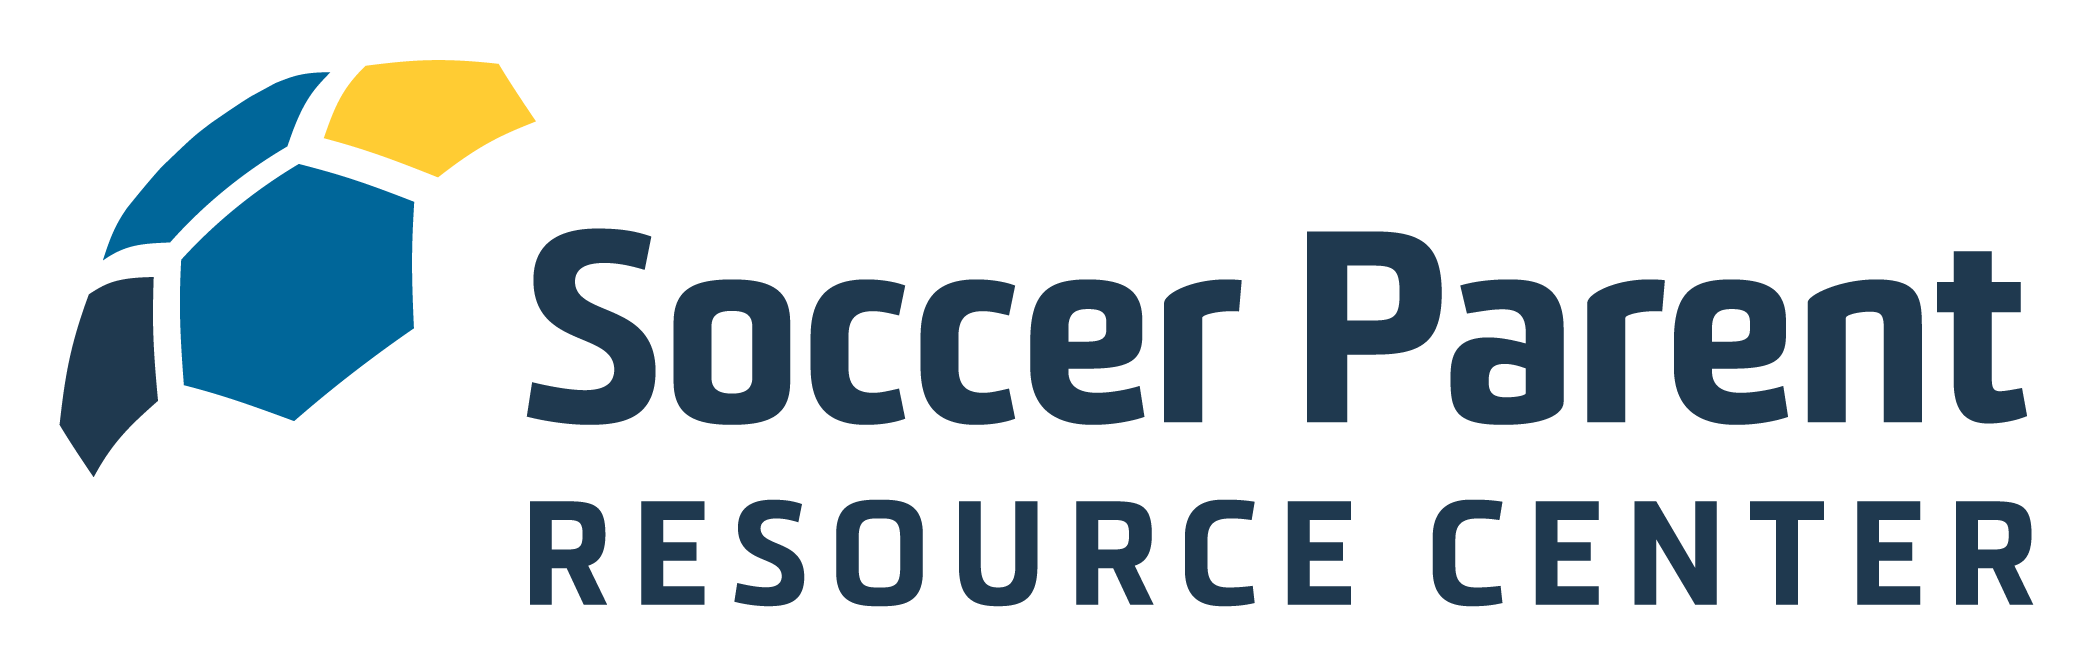 Soccer Parent Resource Center